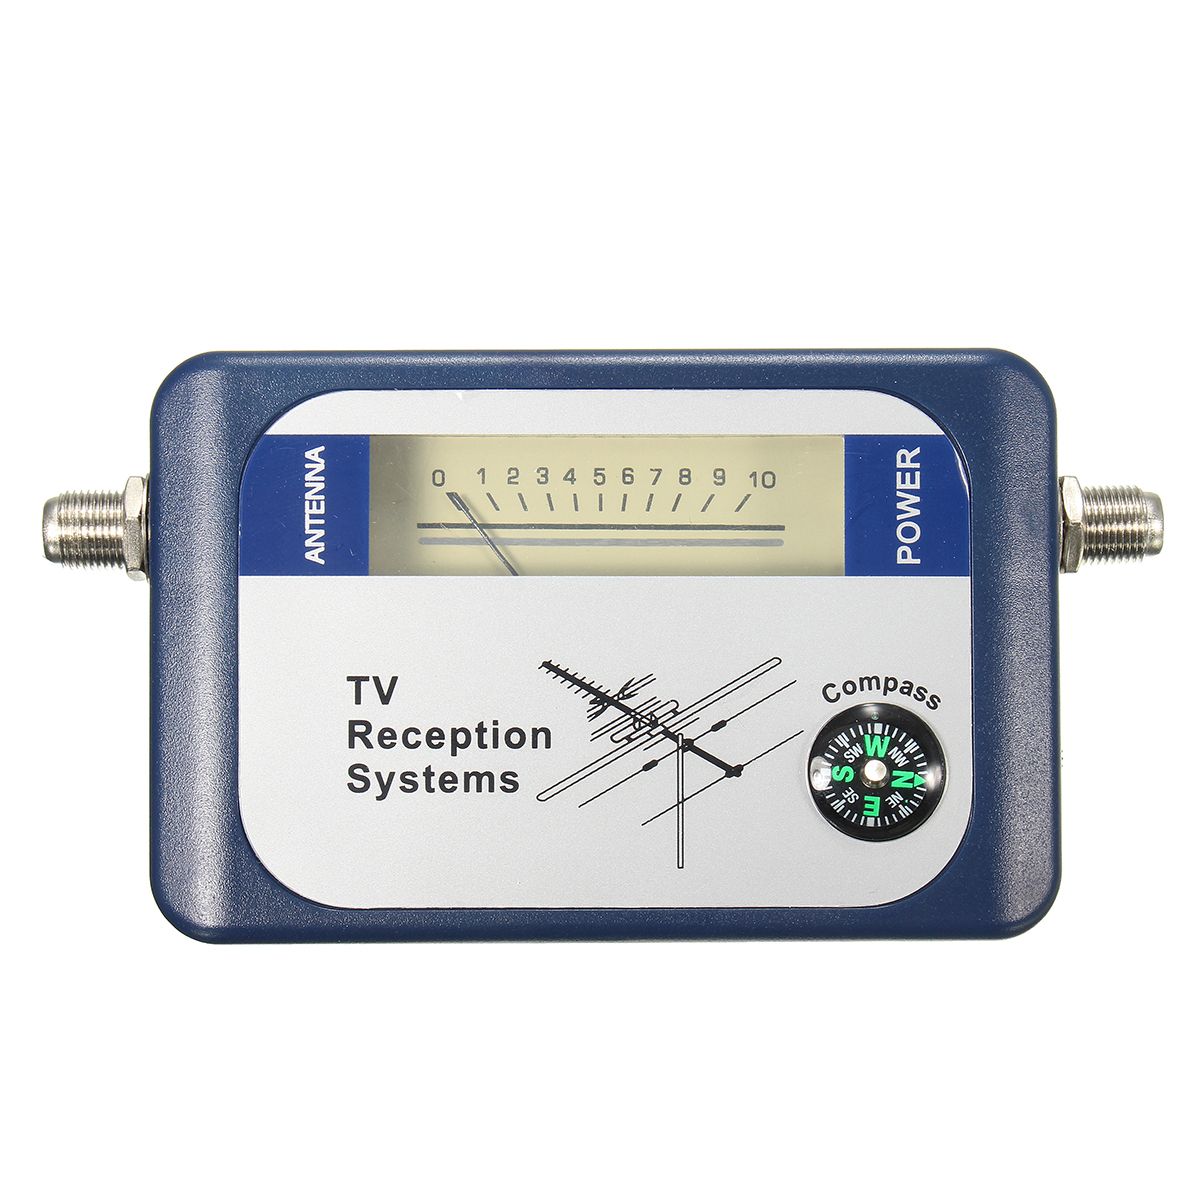 SF95DT-DVB-T-Finder-Digital-Aerial-Terrestrial-TV-Antenna-Signal-Strength-Meter-Compass-1103459